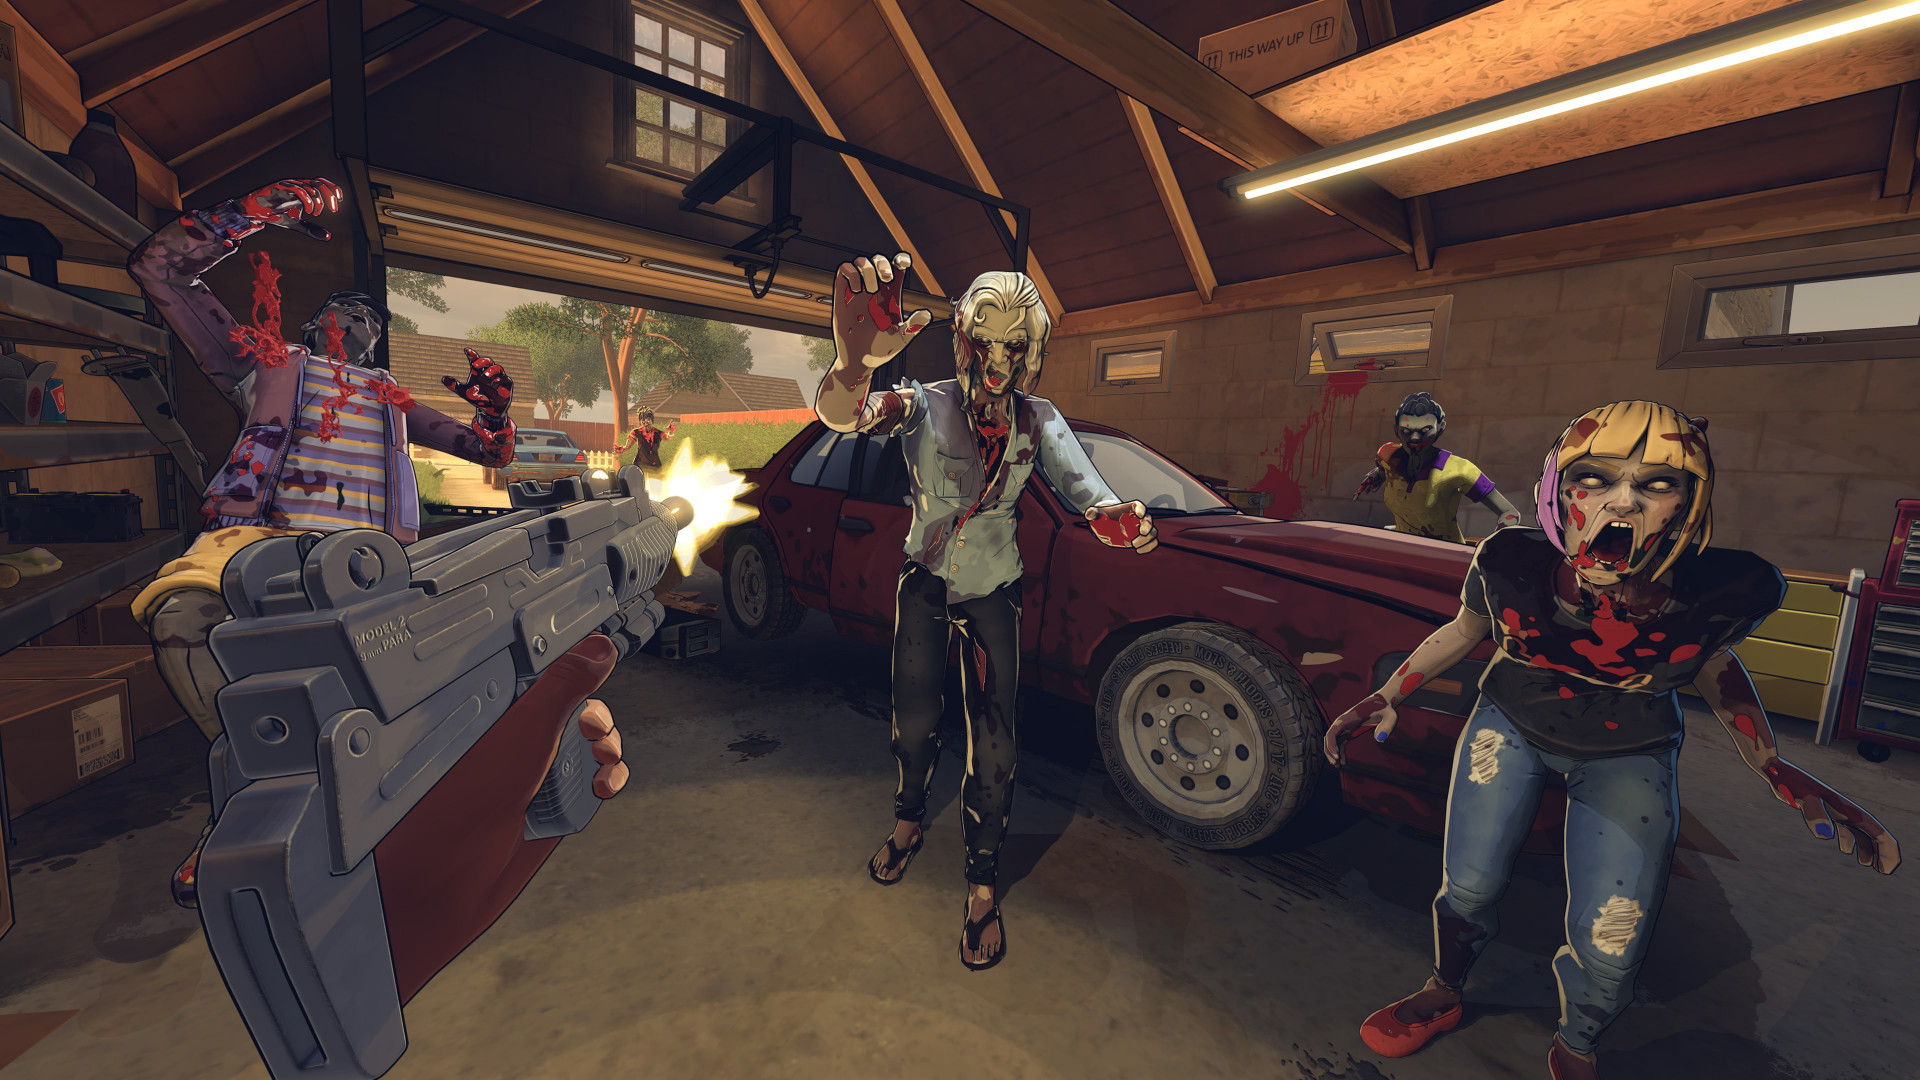 Zombieland: Headshot Fever Reloaded